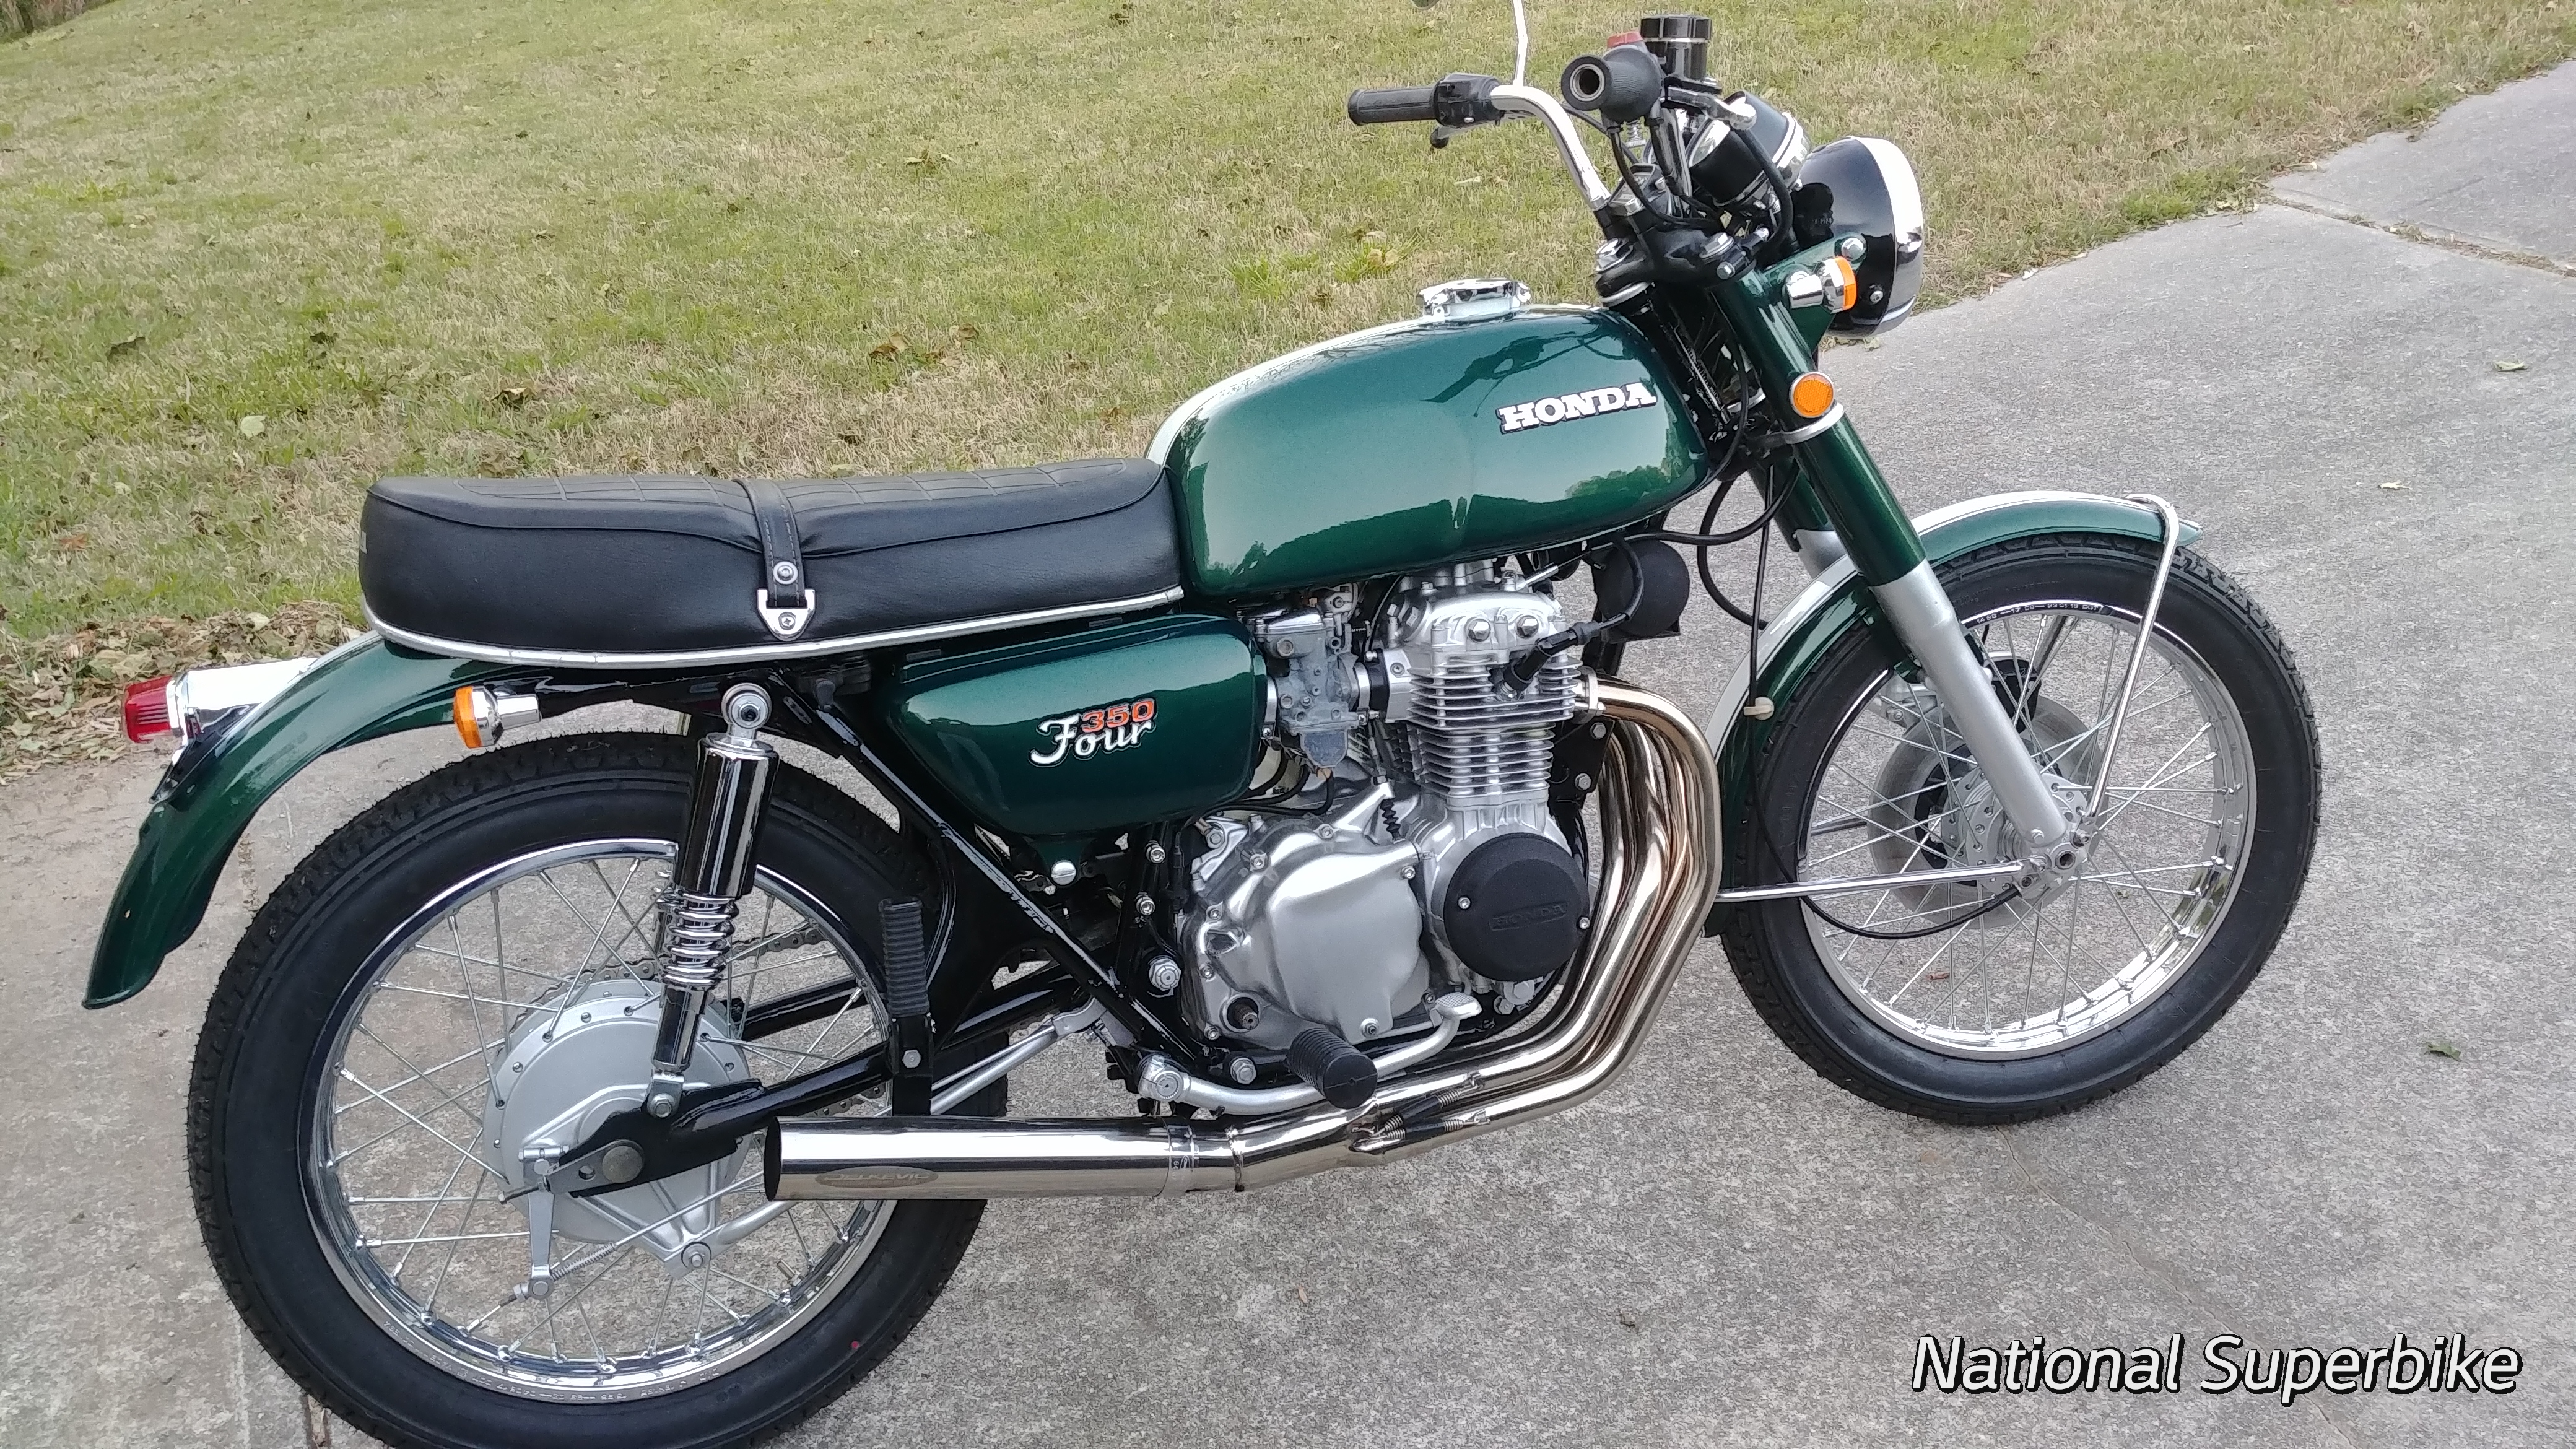 1973 Honda CB360F restoration- finished!